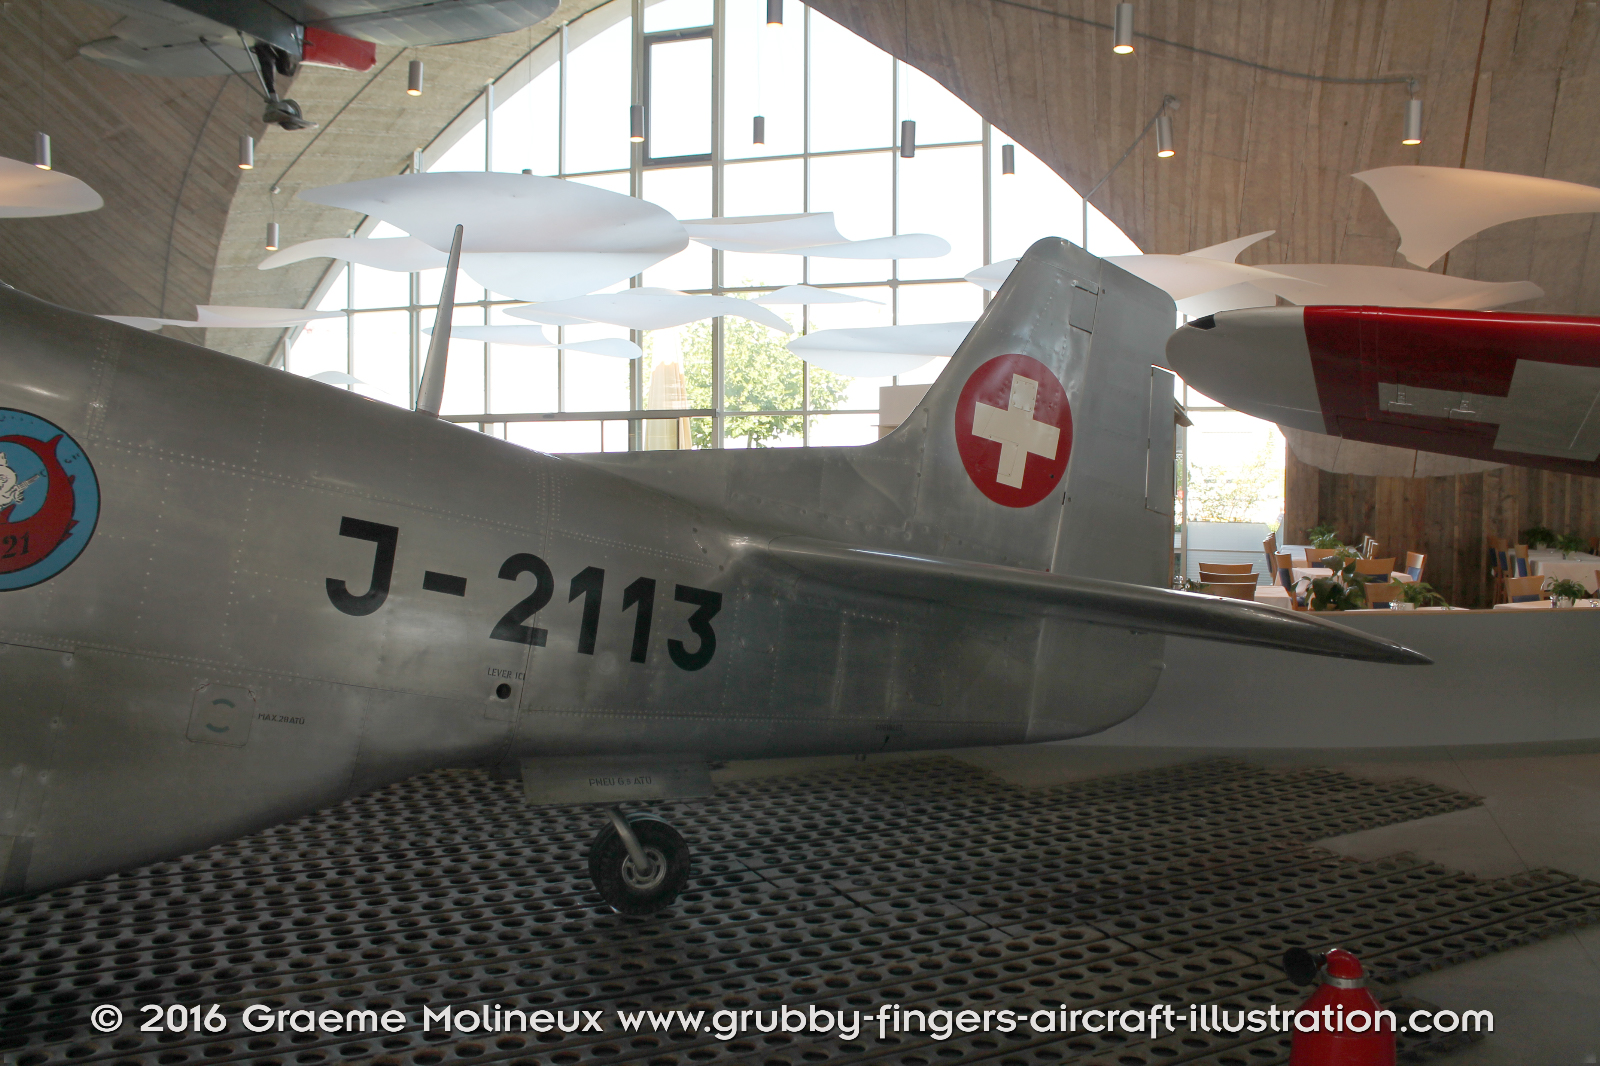 NORTH_AMERICAN_P-51D_Mustang_Walkaround_J-2113_Swiss_Air_Force_Museum_2015_18_GrubbyFingers